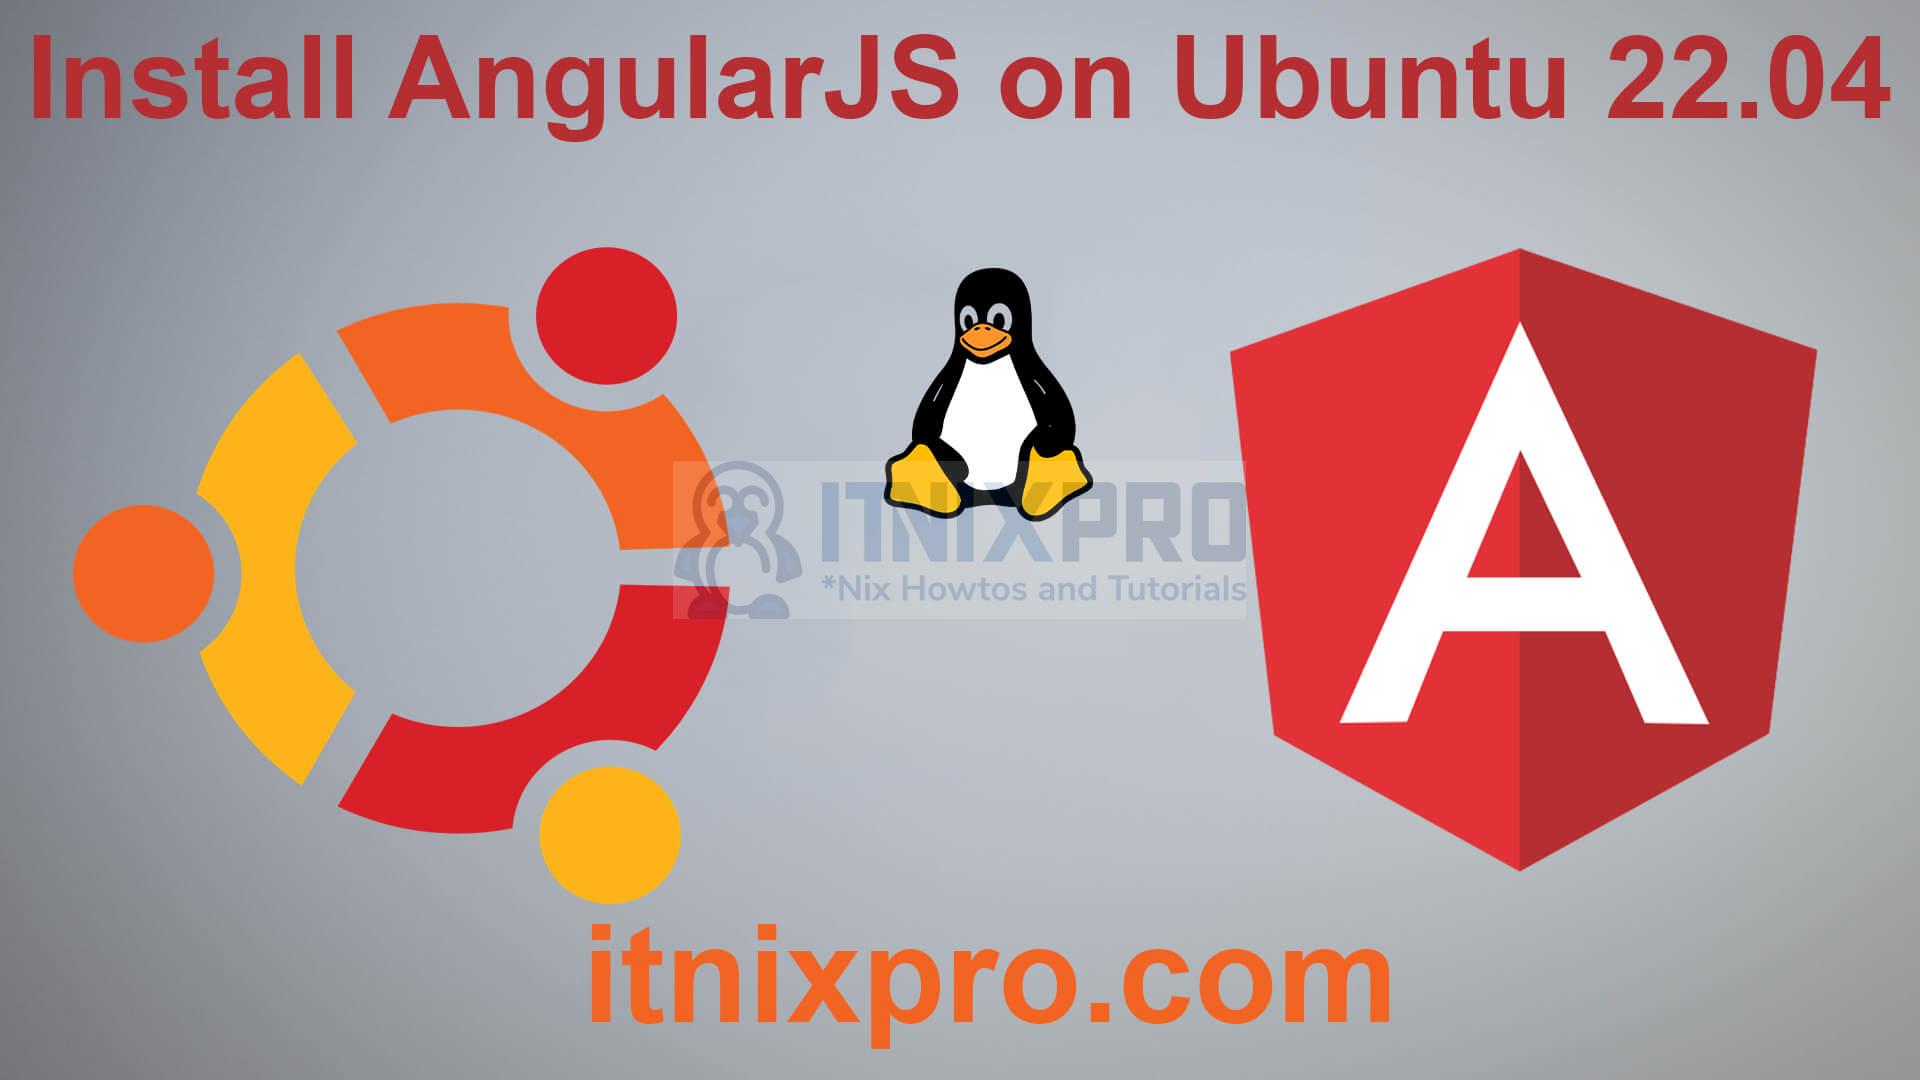 Install AngularJS on Ubuntu 22.04